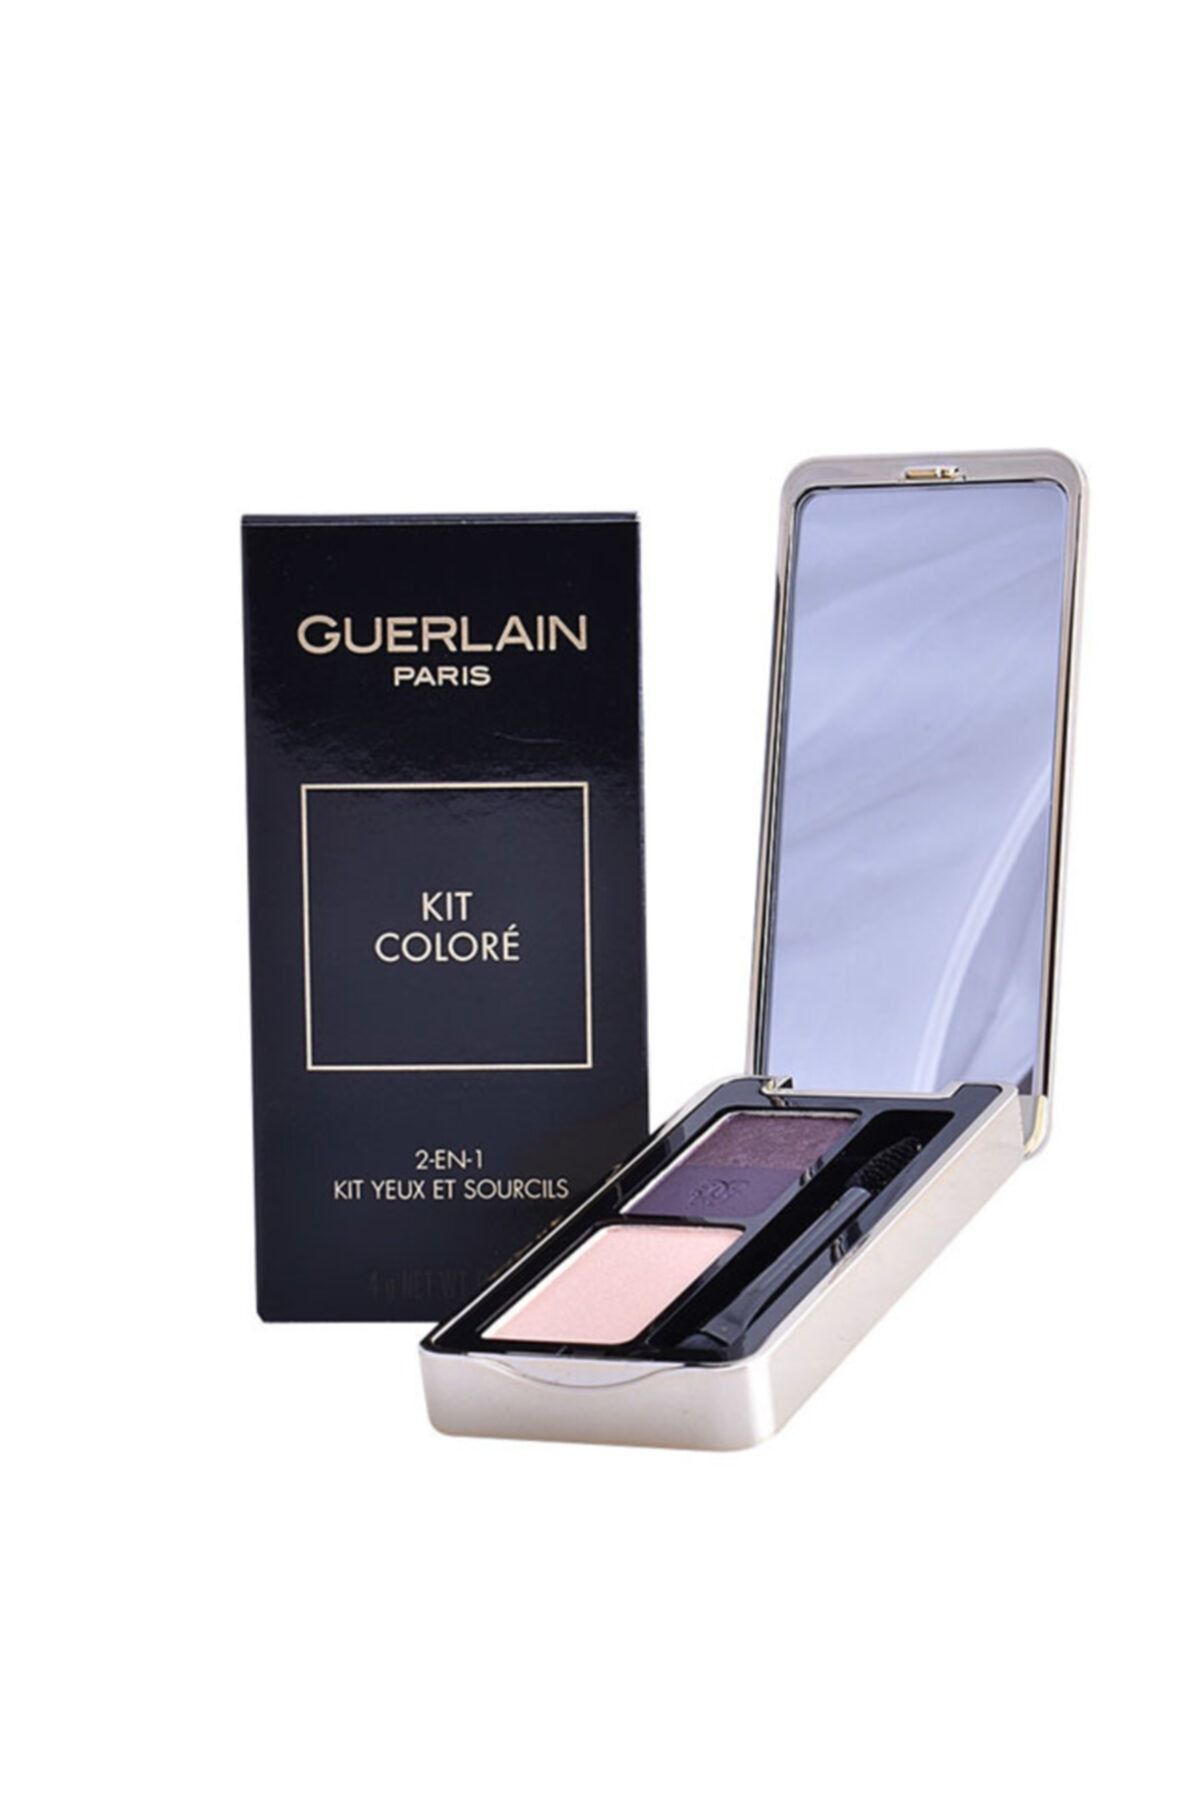 Guerlain Universal Kit Colore Göz Ve Kaş Farı Paleti